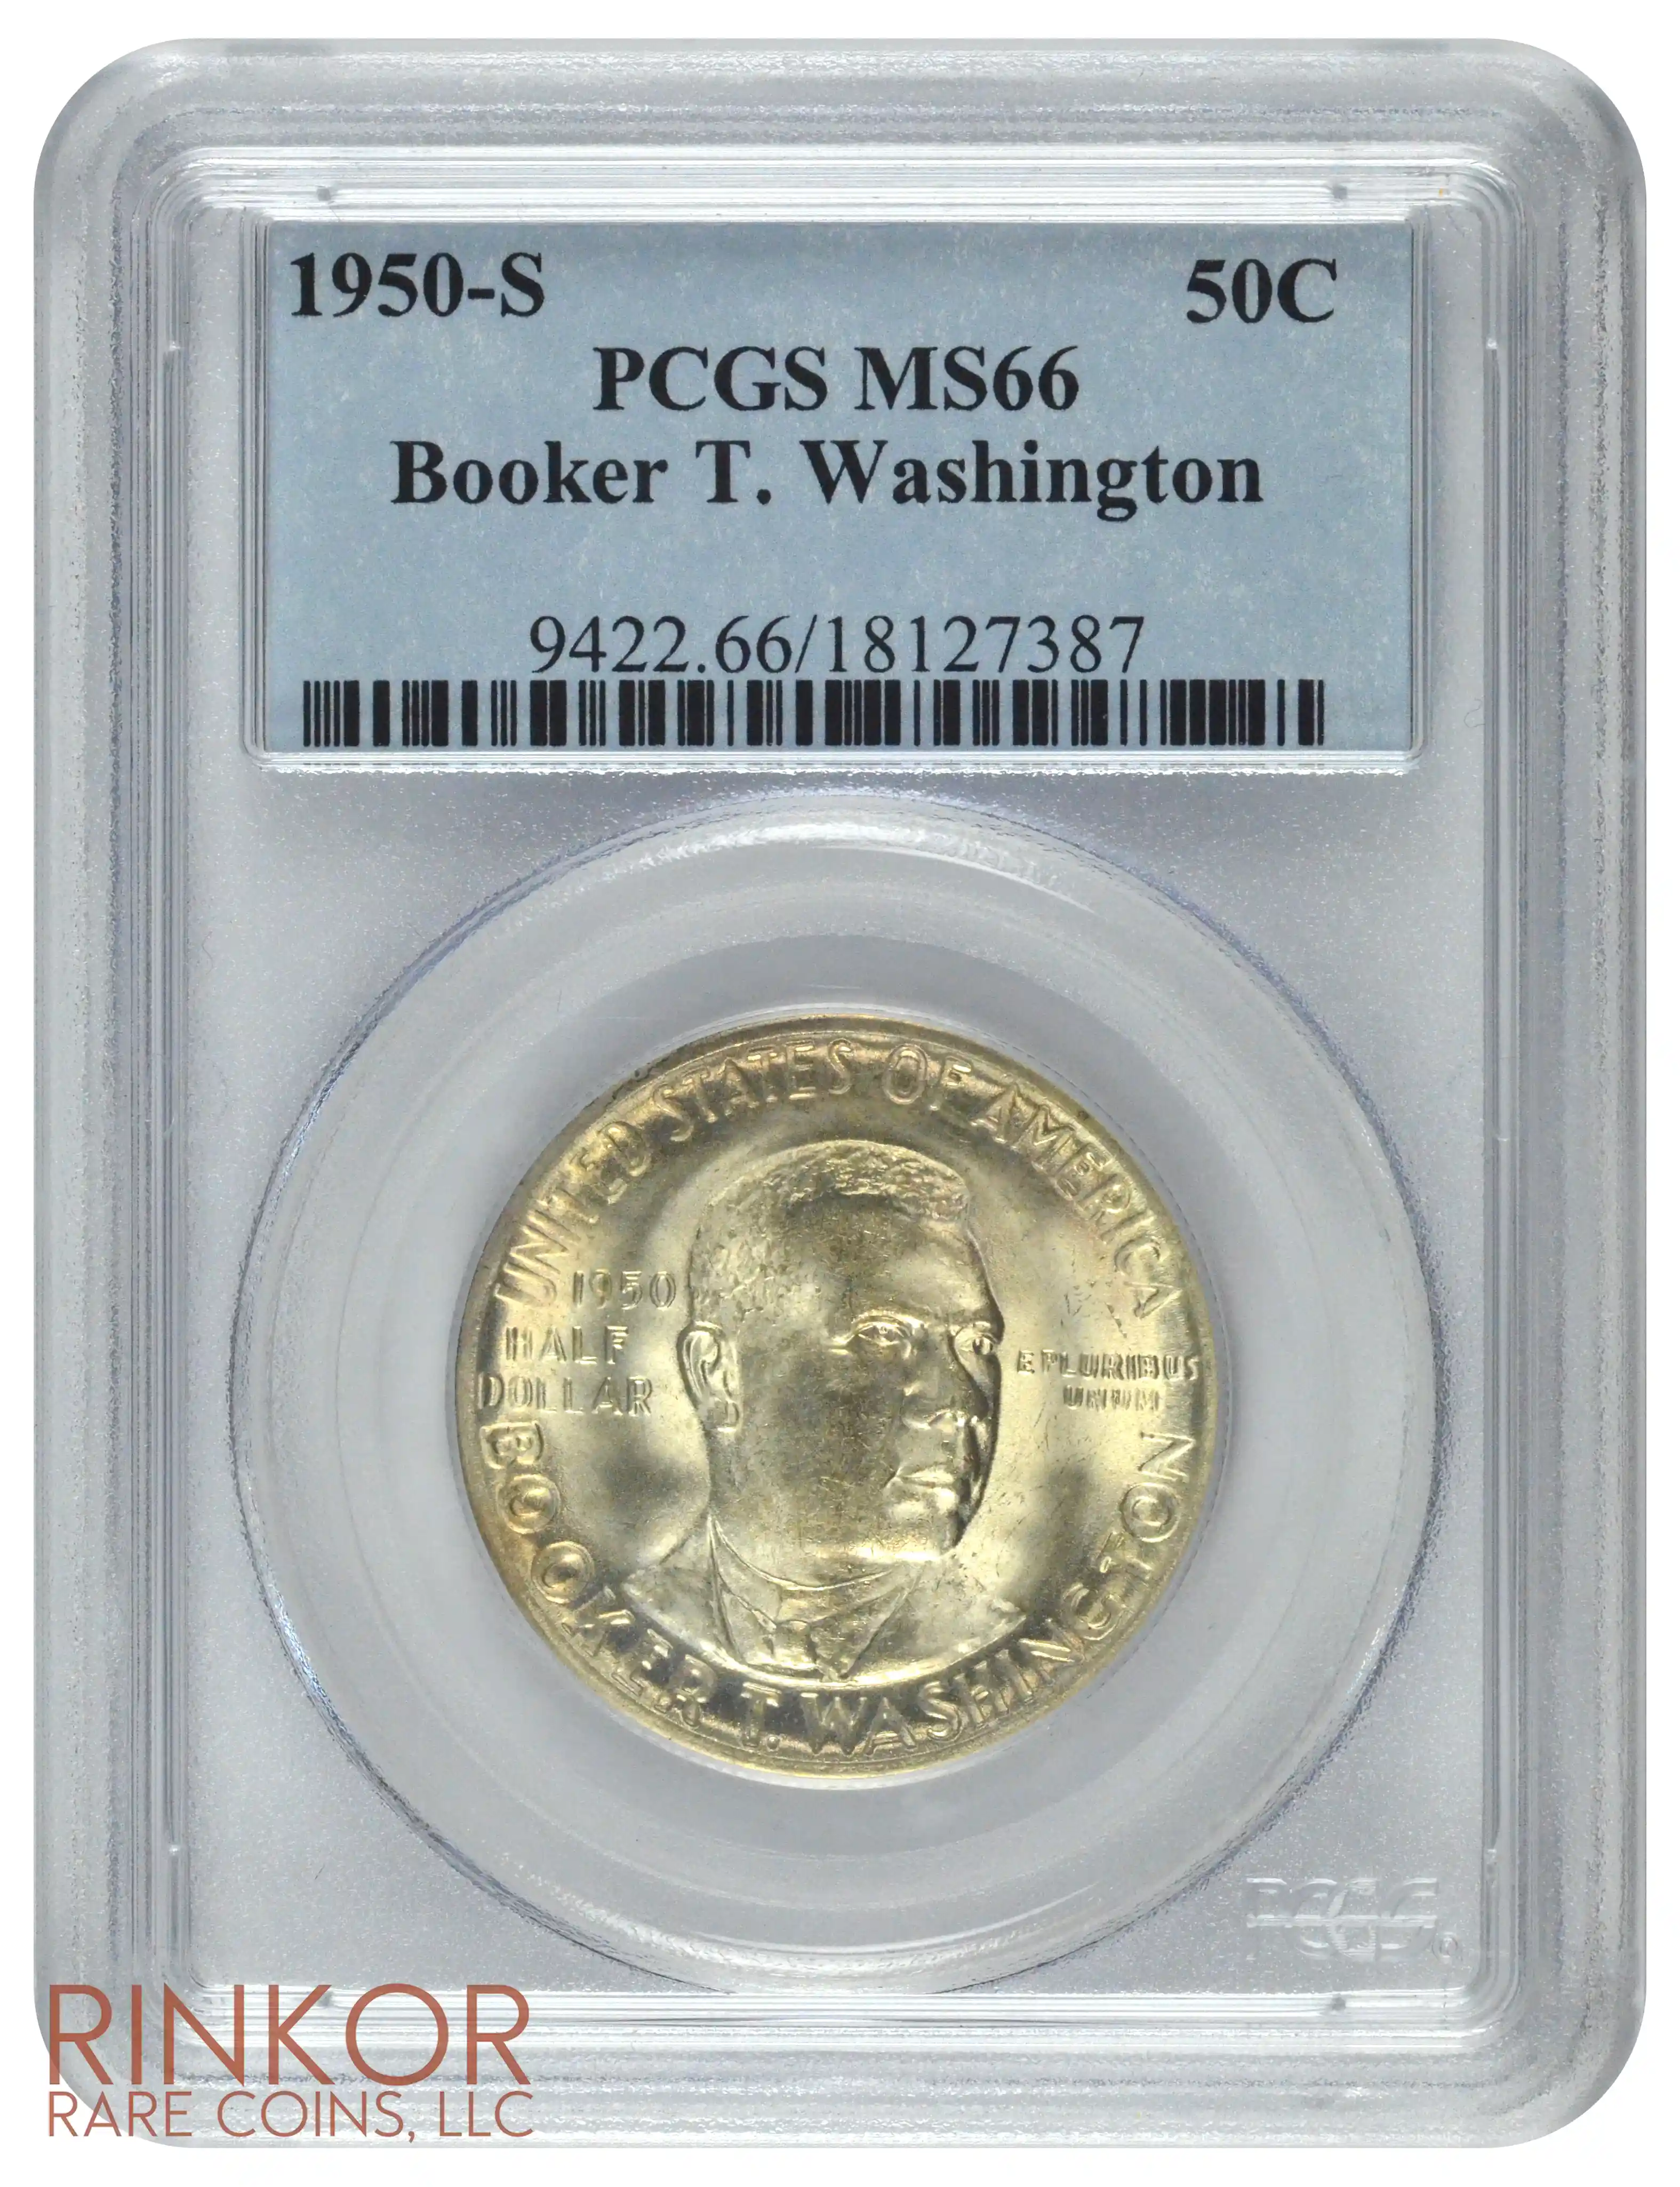 1950-S Booker T. Washington Commemorative Half Dollar PCGS MS 66